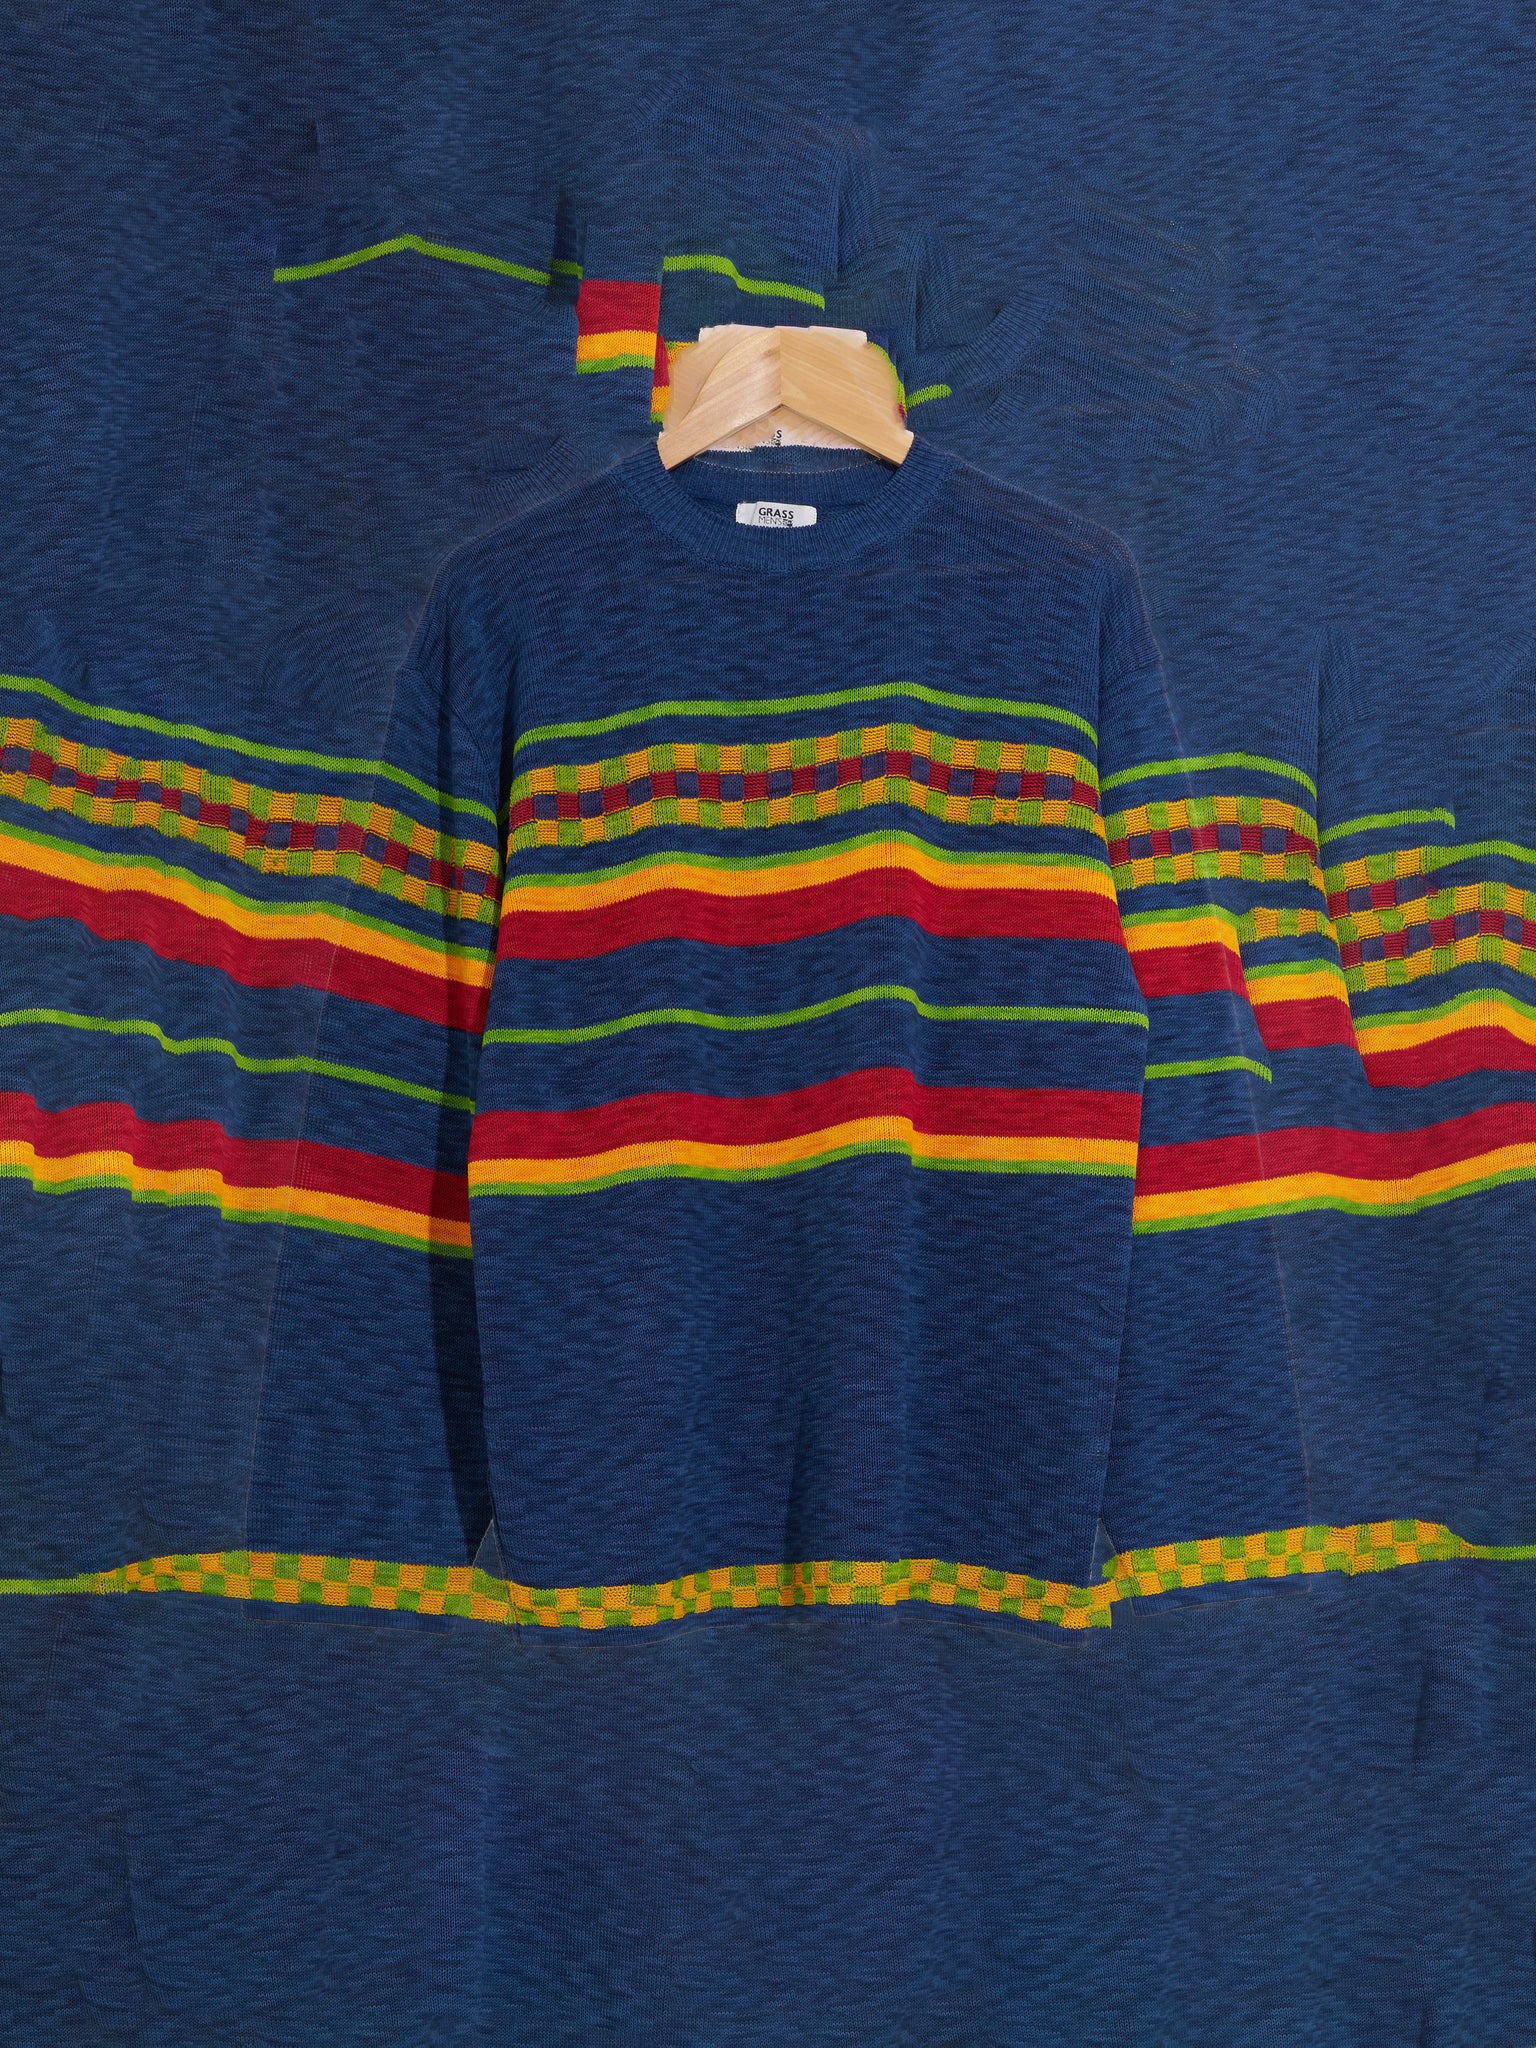 Grass Men’s 1990s blue acrylic multicolour horizontal stripe sweater - XS S M